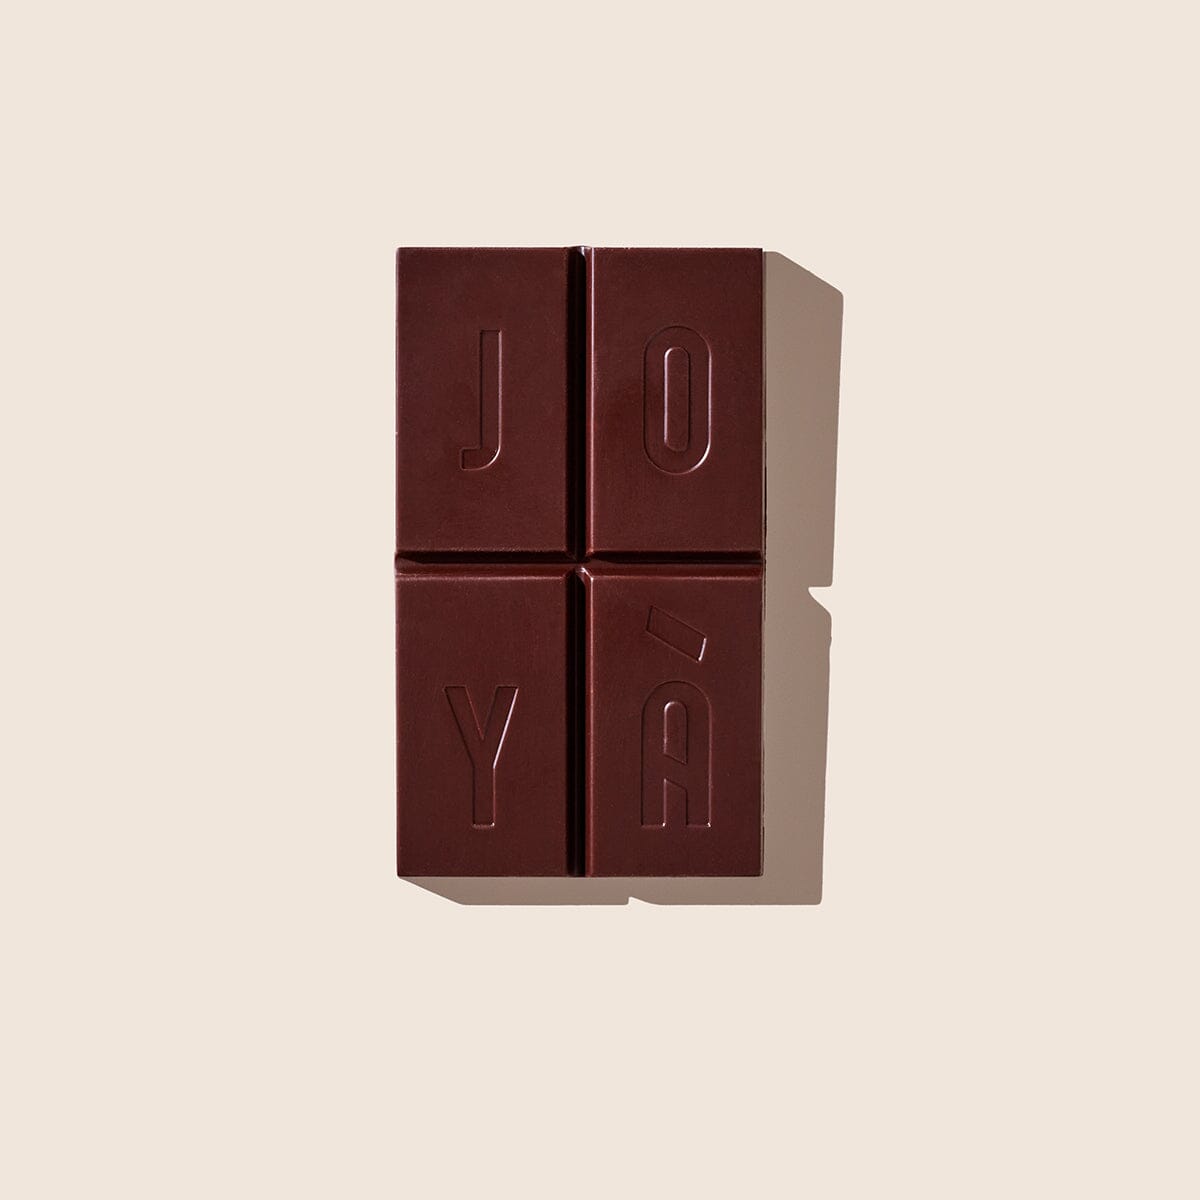 Coffee Dark Chocolate Adaptogens, Functional Chocolate